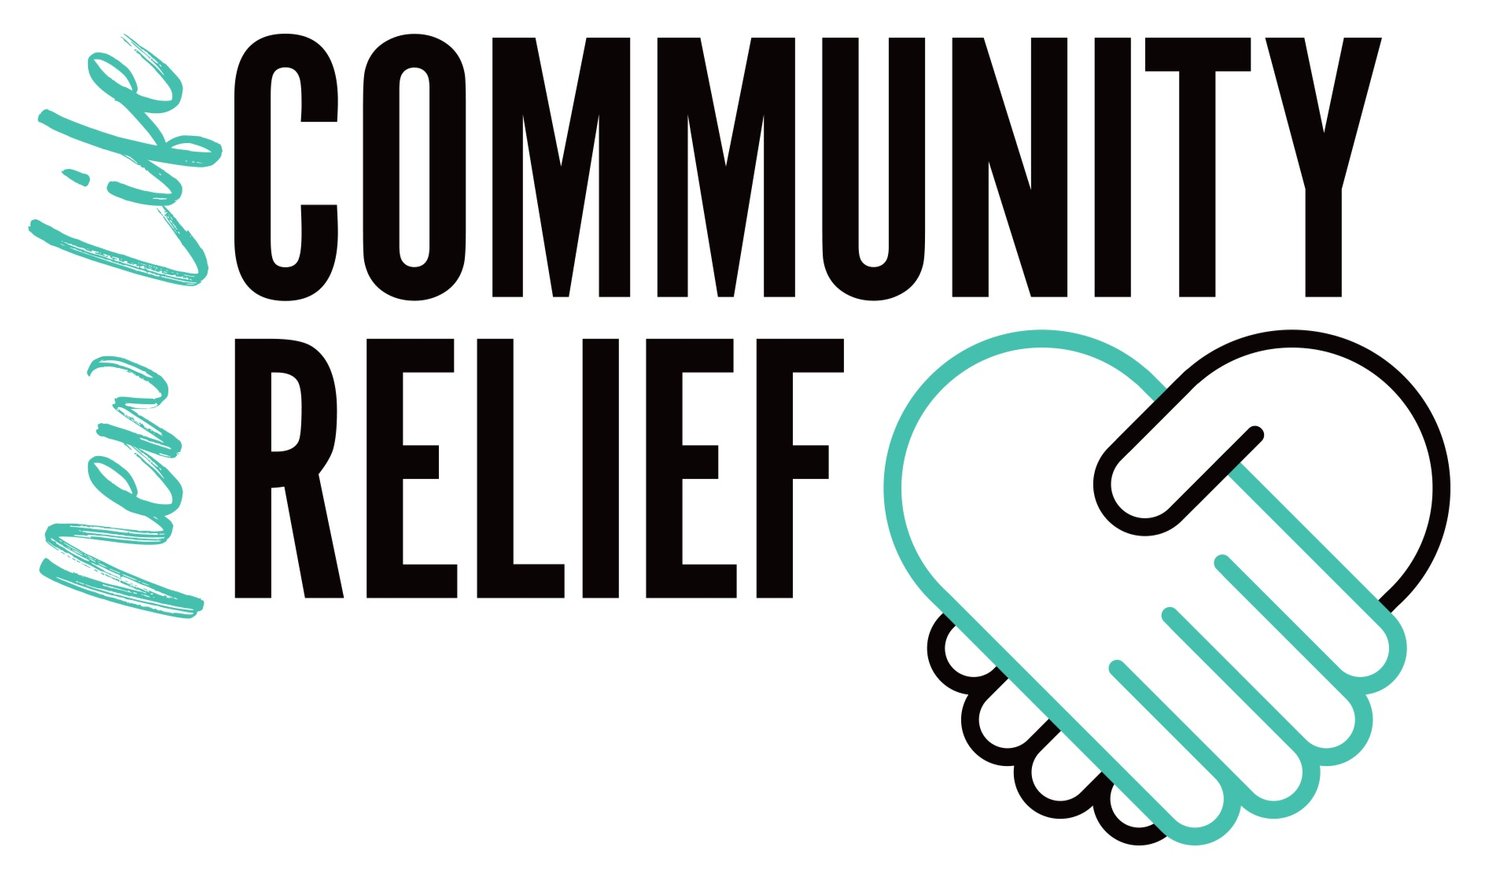 New Life Community Relief